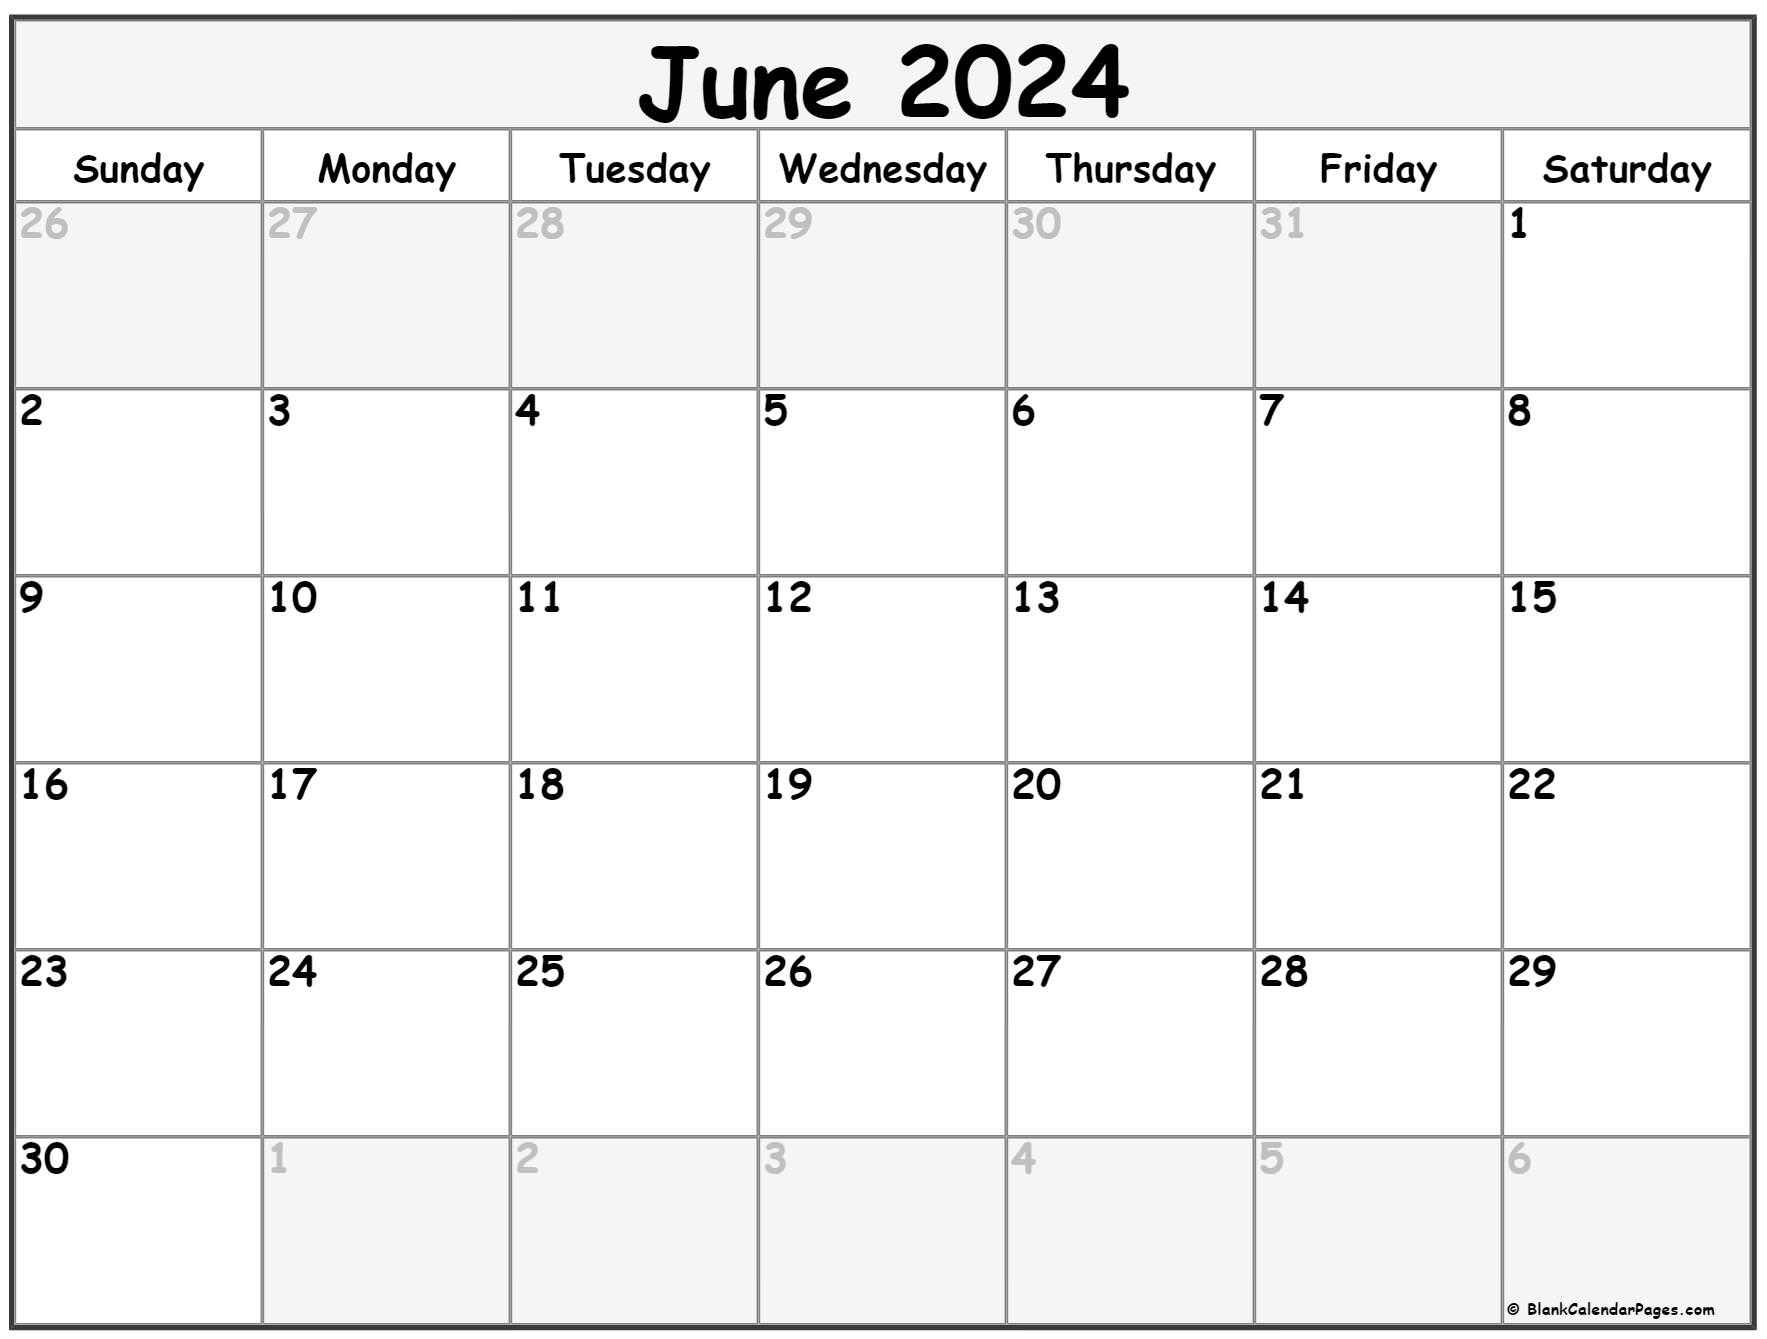 June 2024 Calendar | Free Printable Calendar for Printable June 2024 Calendar